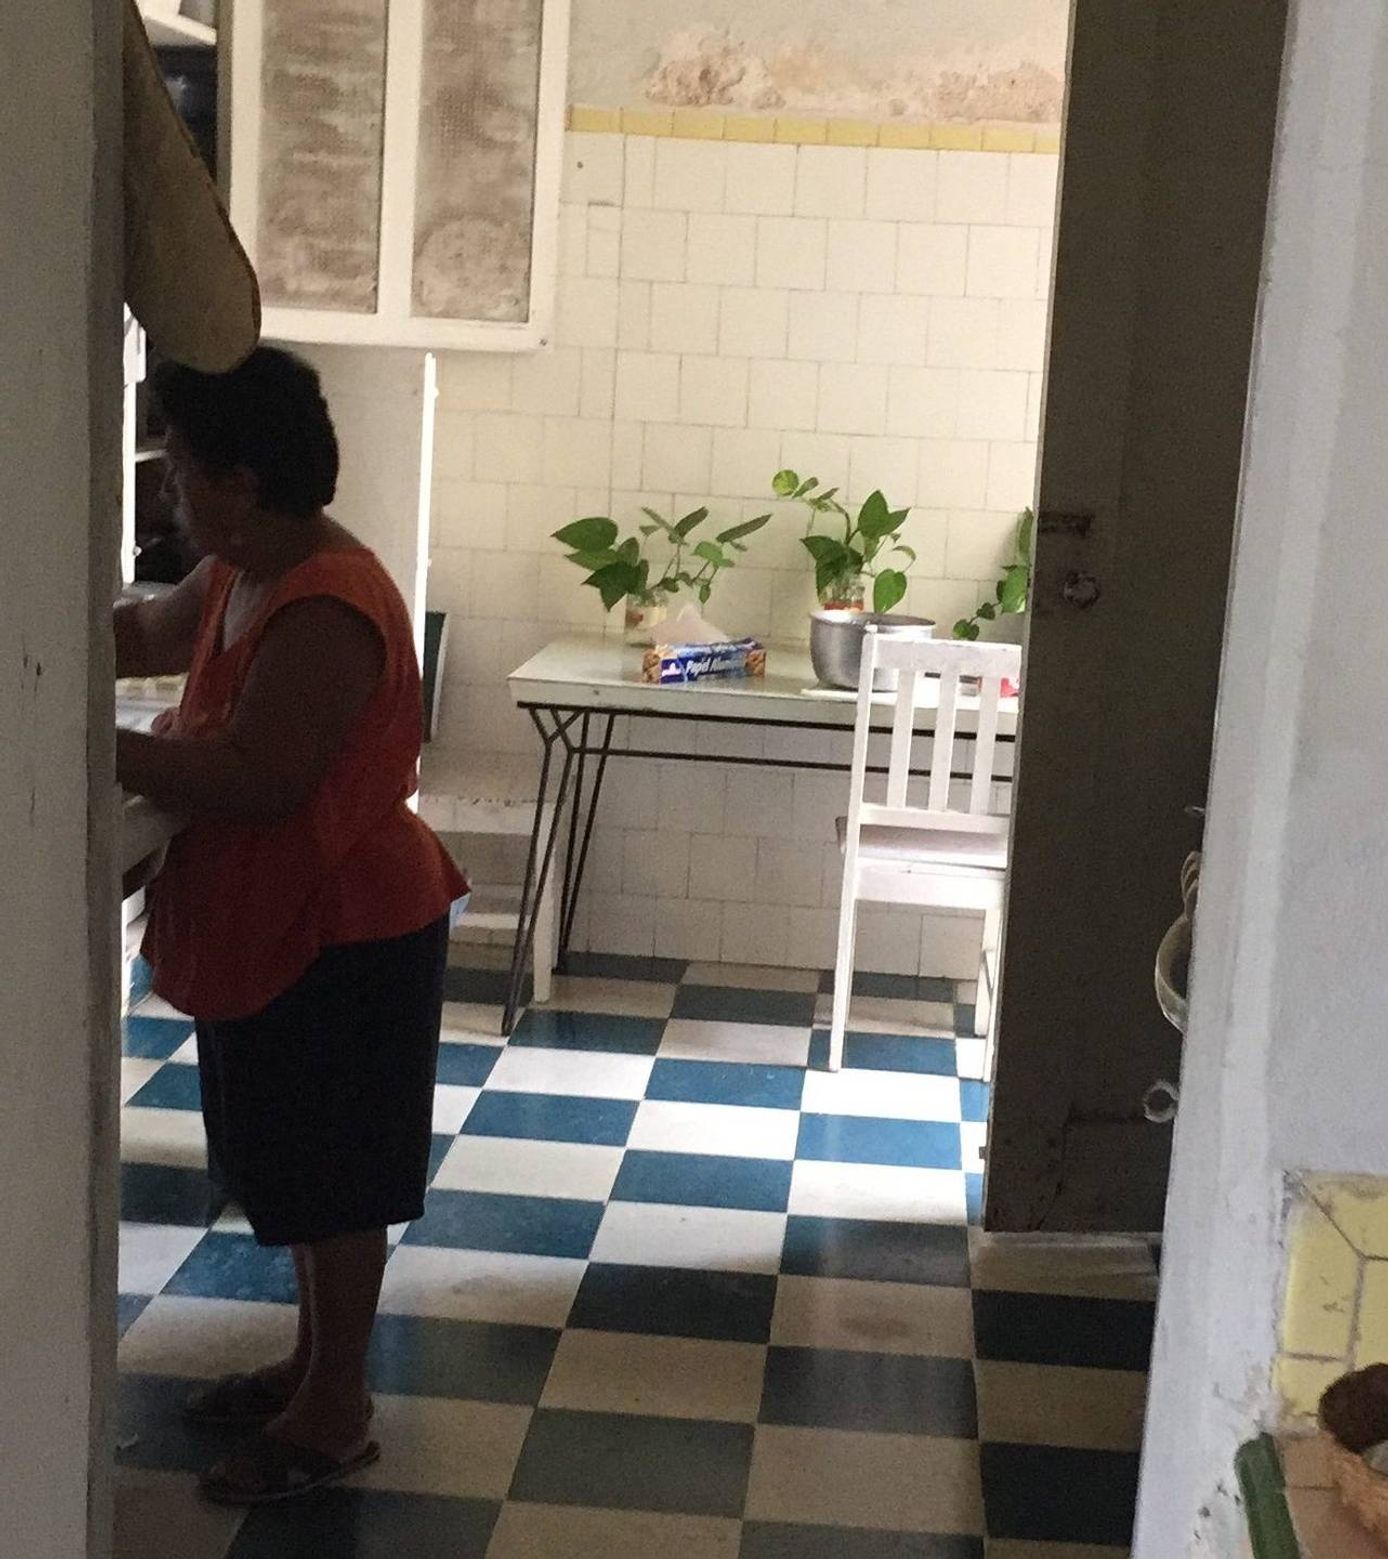 Dońa Polita prepares food in Guzman's grandmother's kitchen.